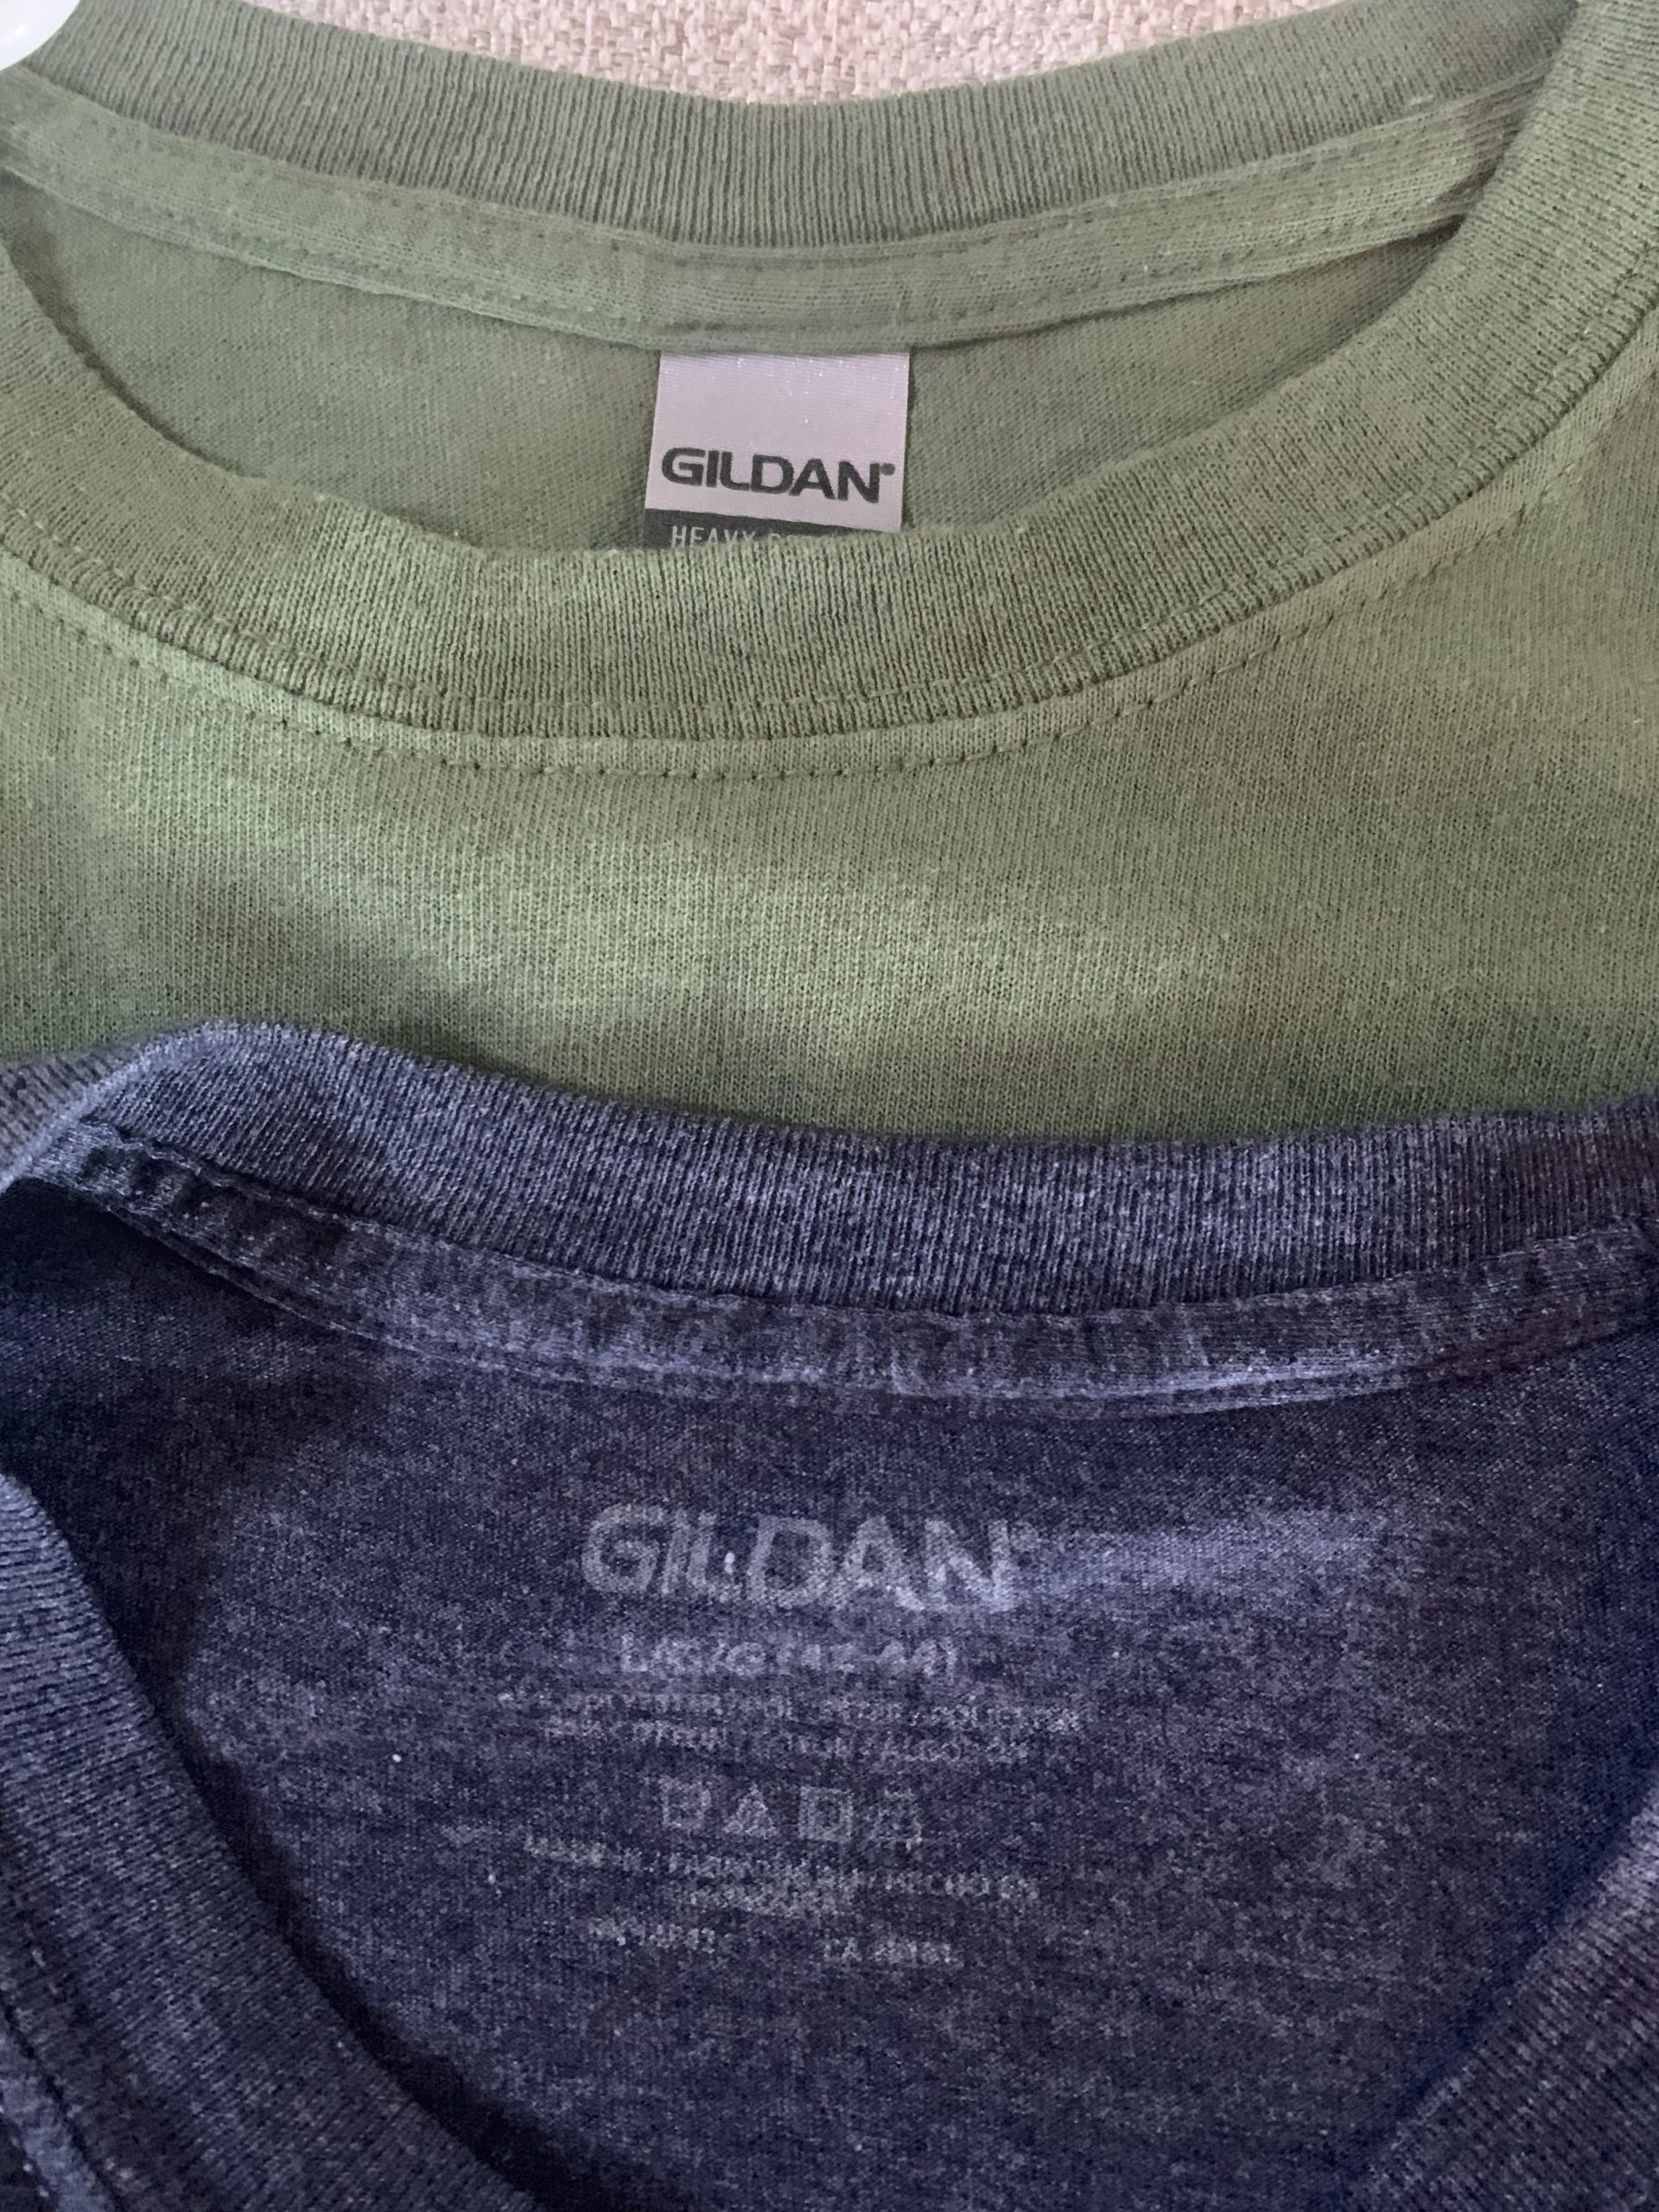 Why I Love Cheap Gildan T-Shirts | The Off Brand Guy